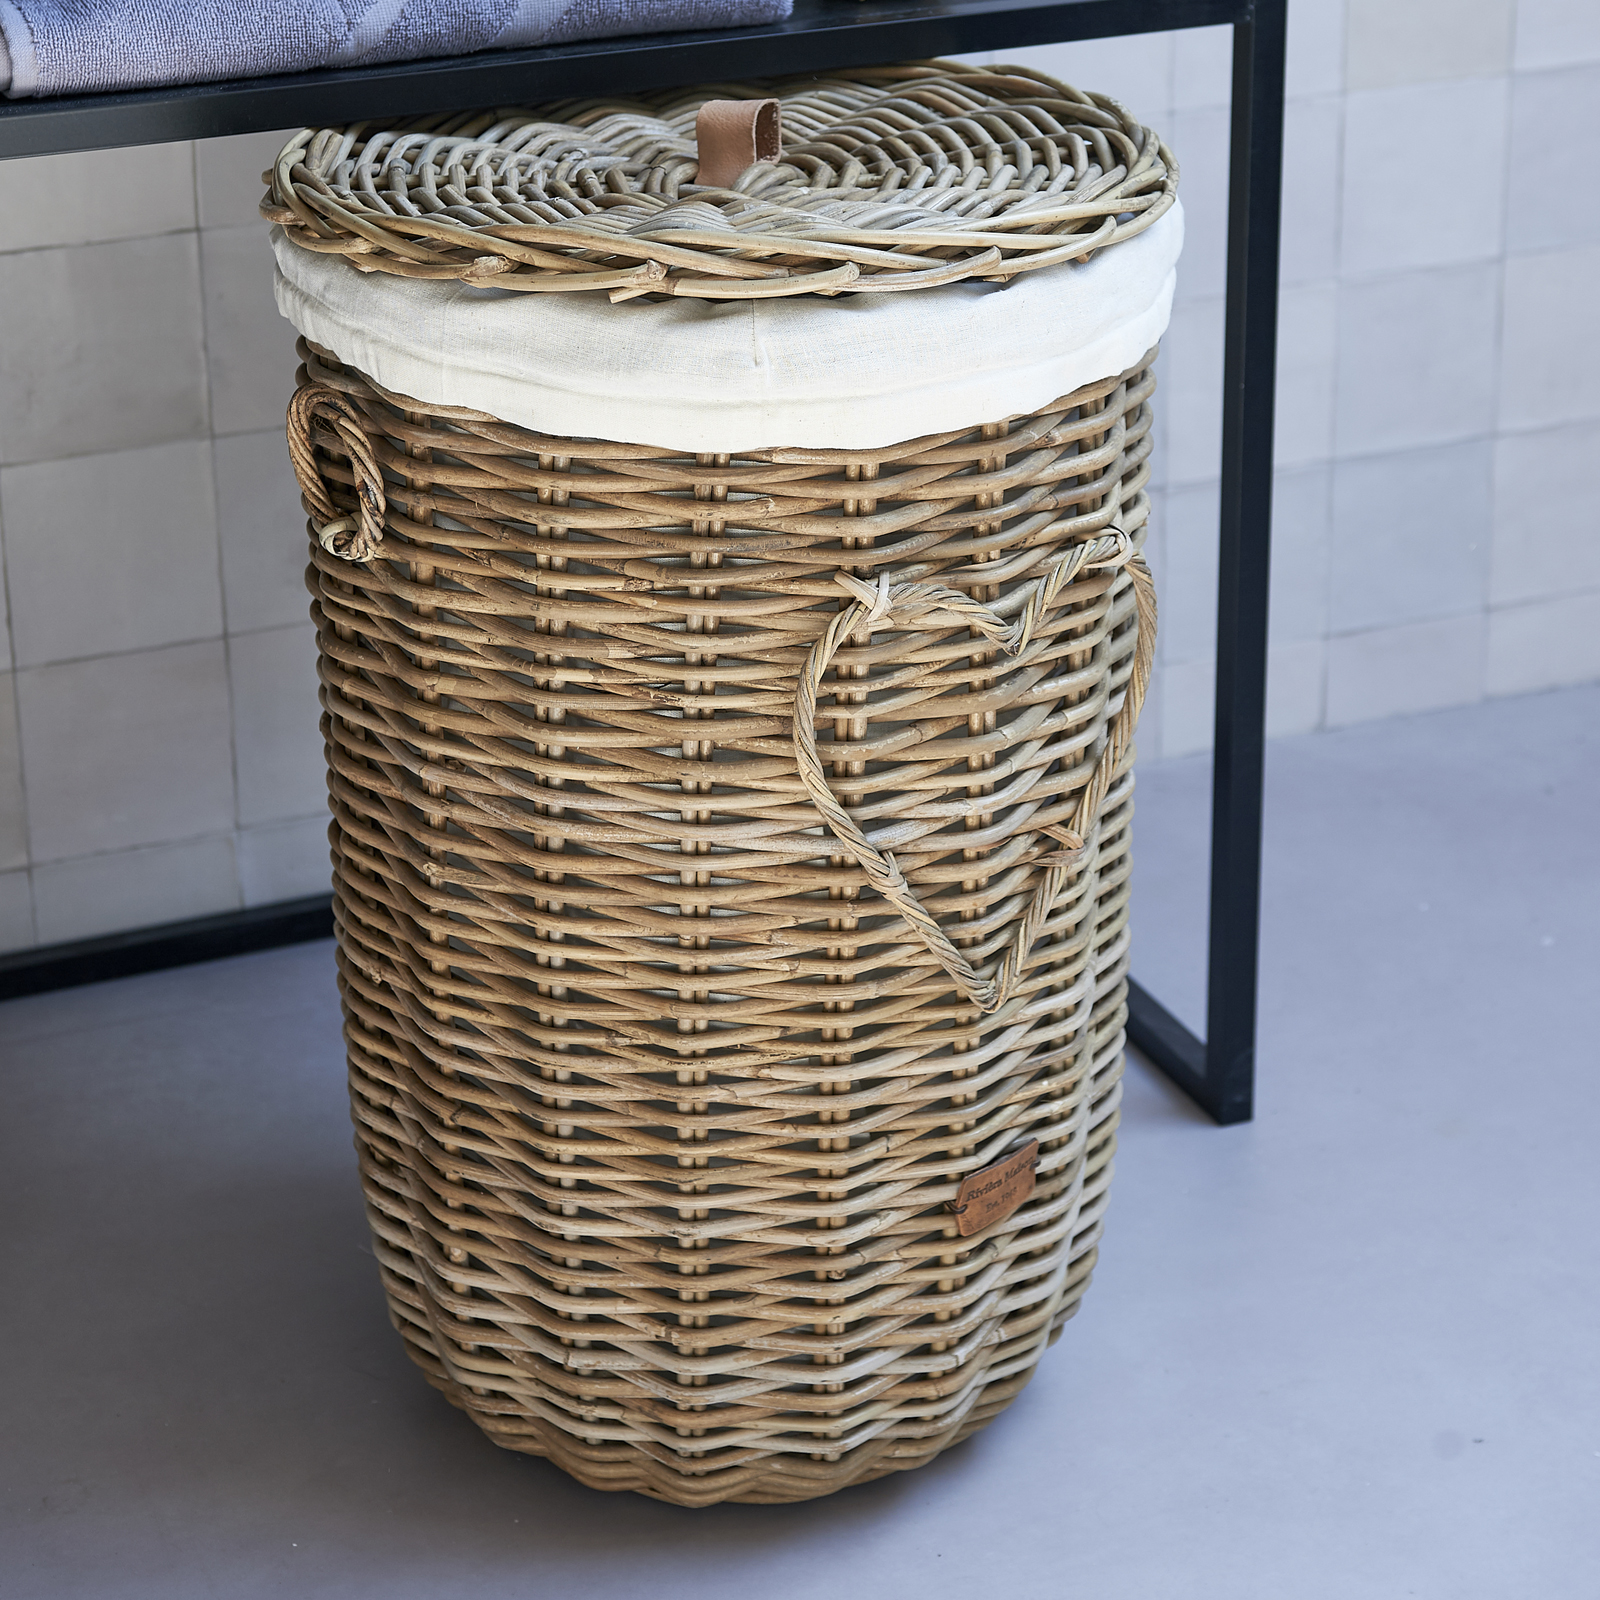 Rustic Rattan Heart Laundry Basket